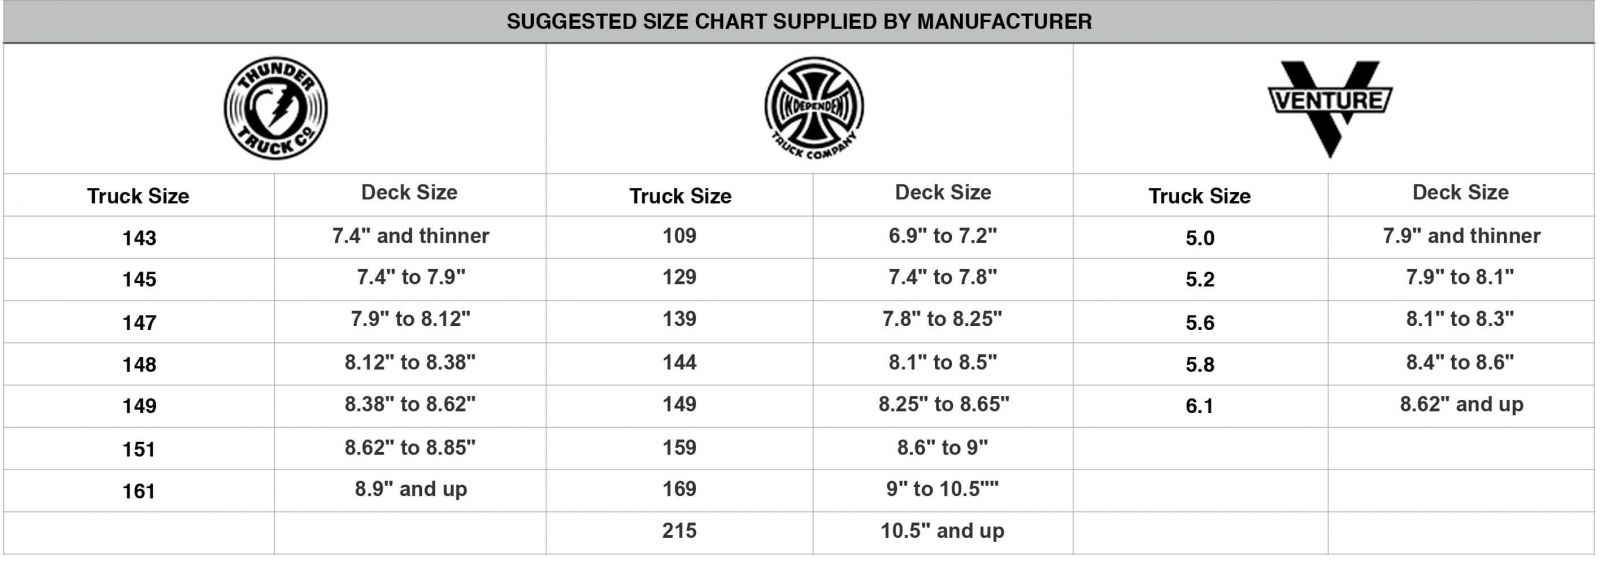 independent size chart trucks - Focus